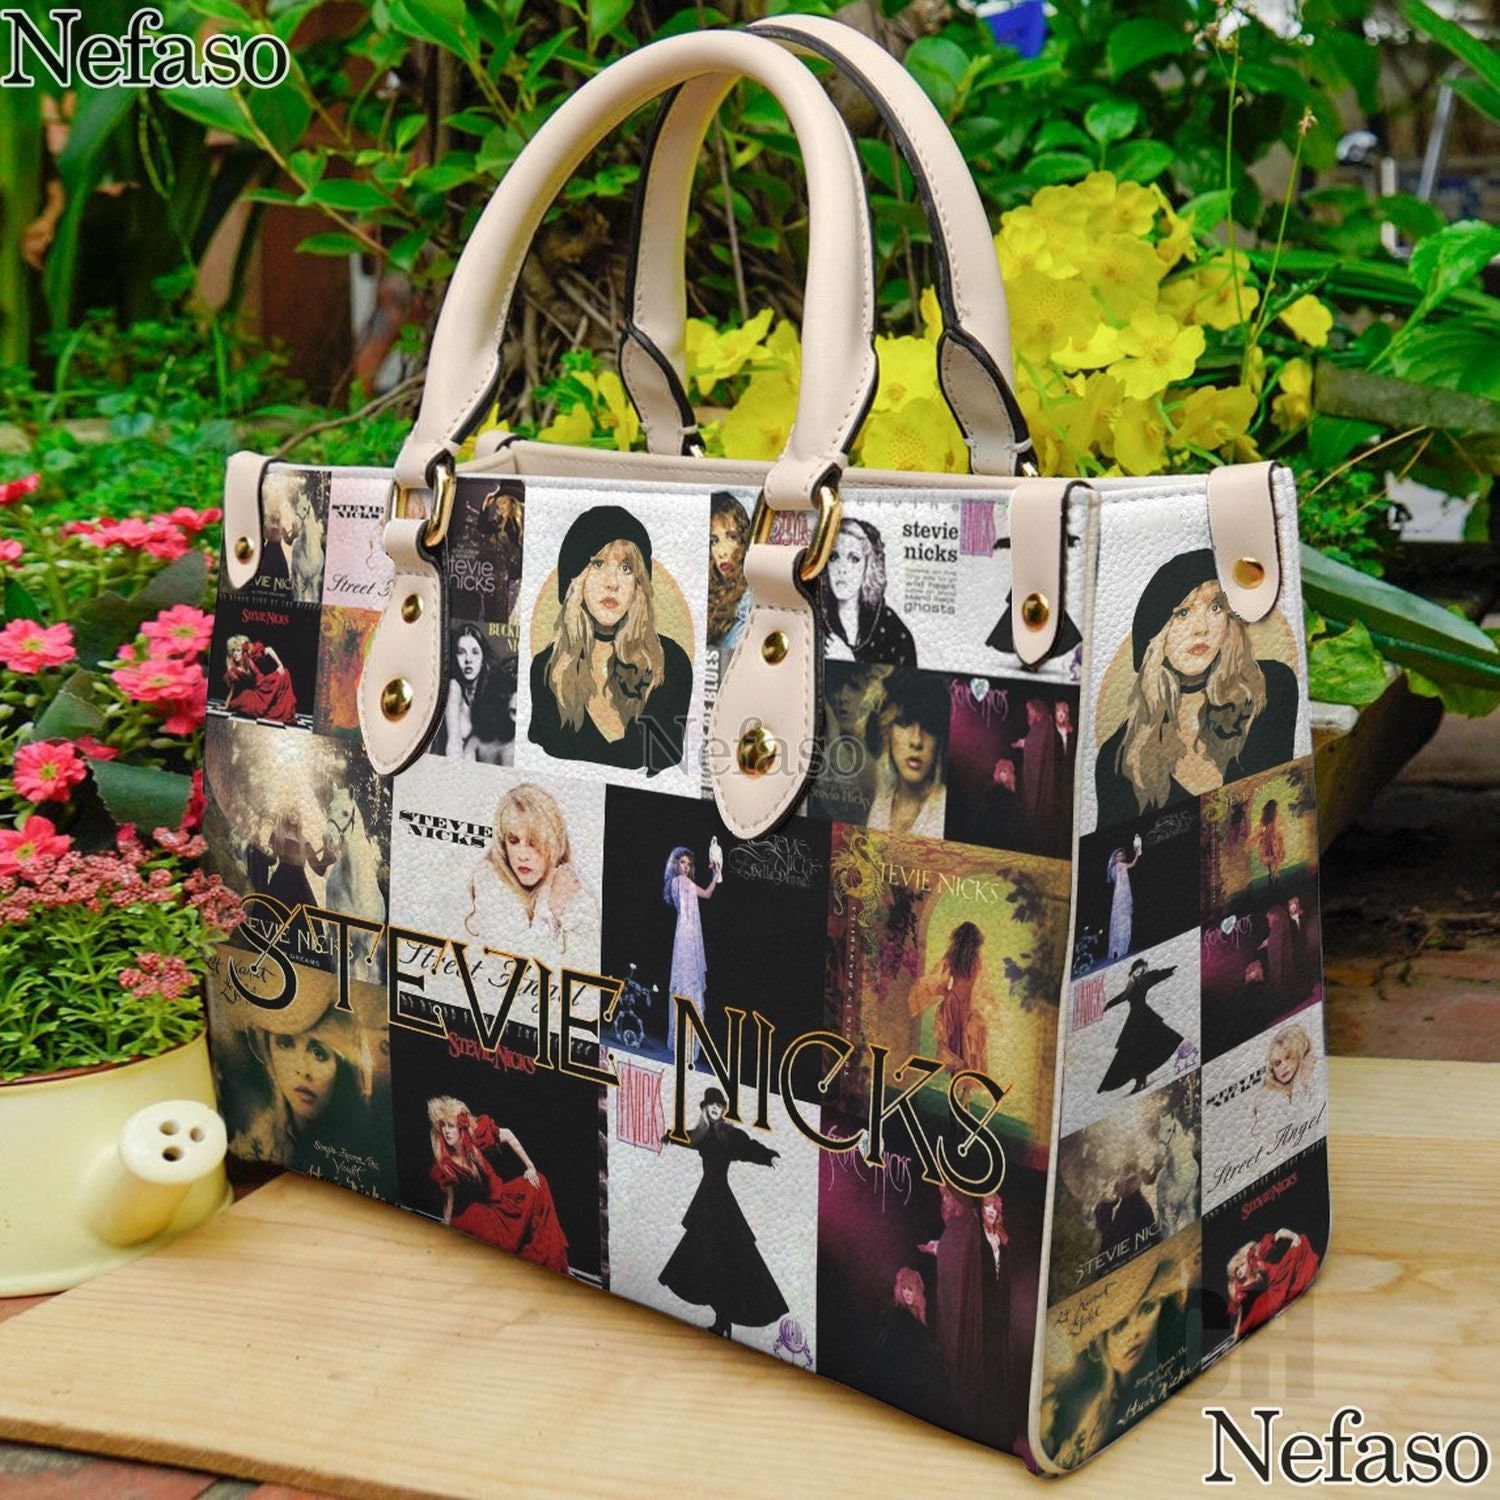 Stevie Nicks Handbag, Stevie Nicks Leather Bag, Stevie Nicks Shoulder Bag, Crossbody Bag, Top Handle Bag, Vintage Handbag